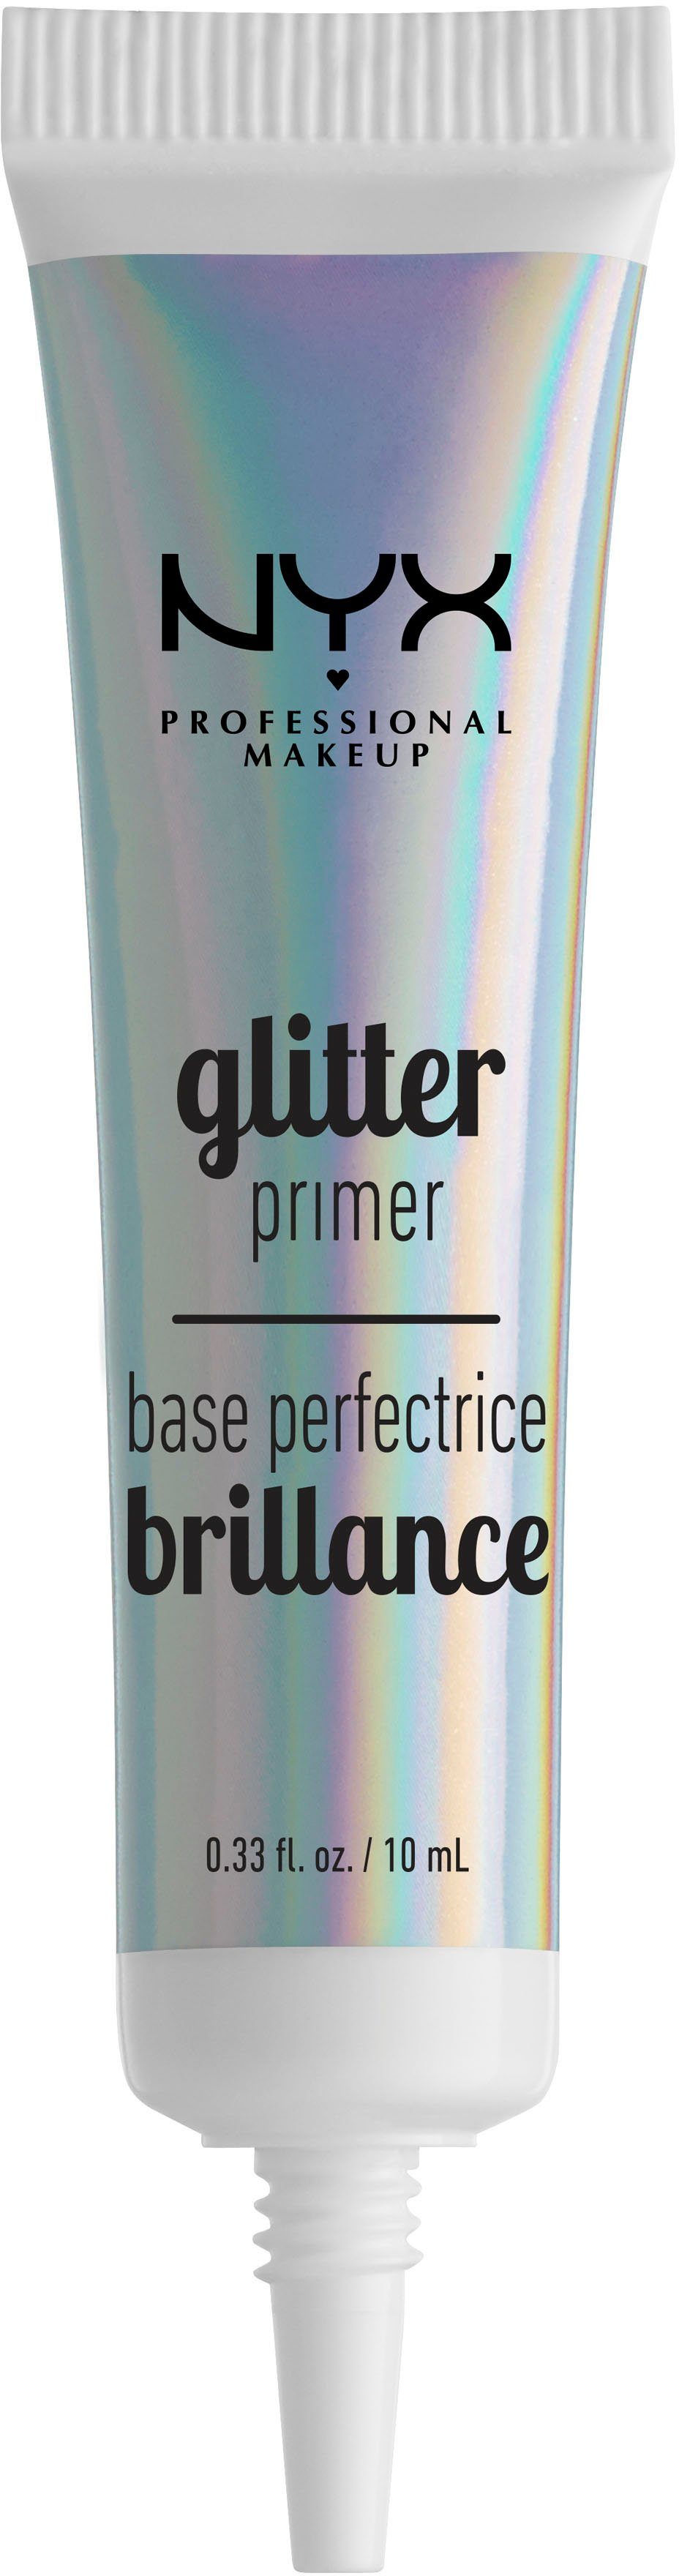 NYX Primer NYX Primer Glitter Professional Makeup